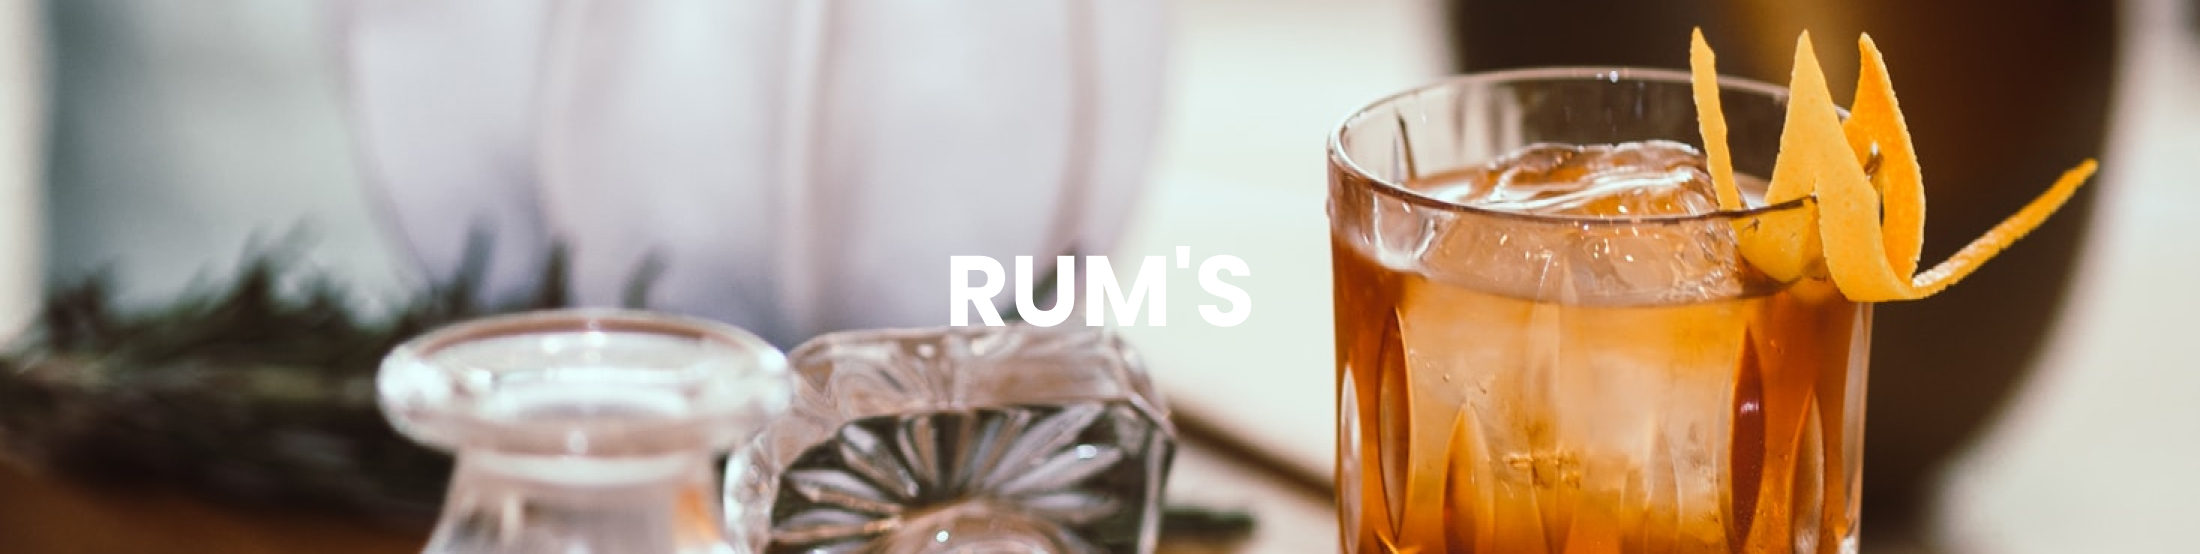 Rum's